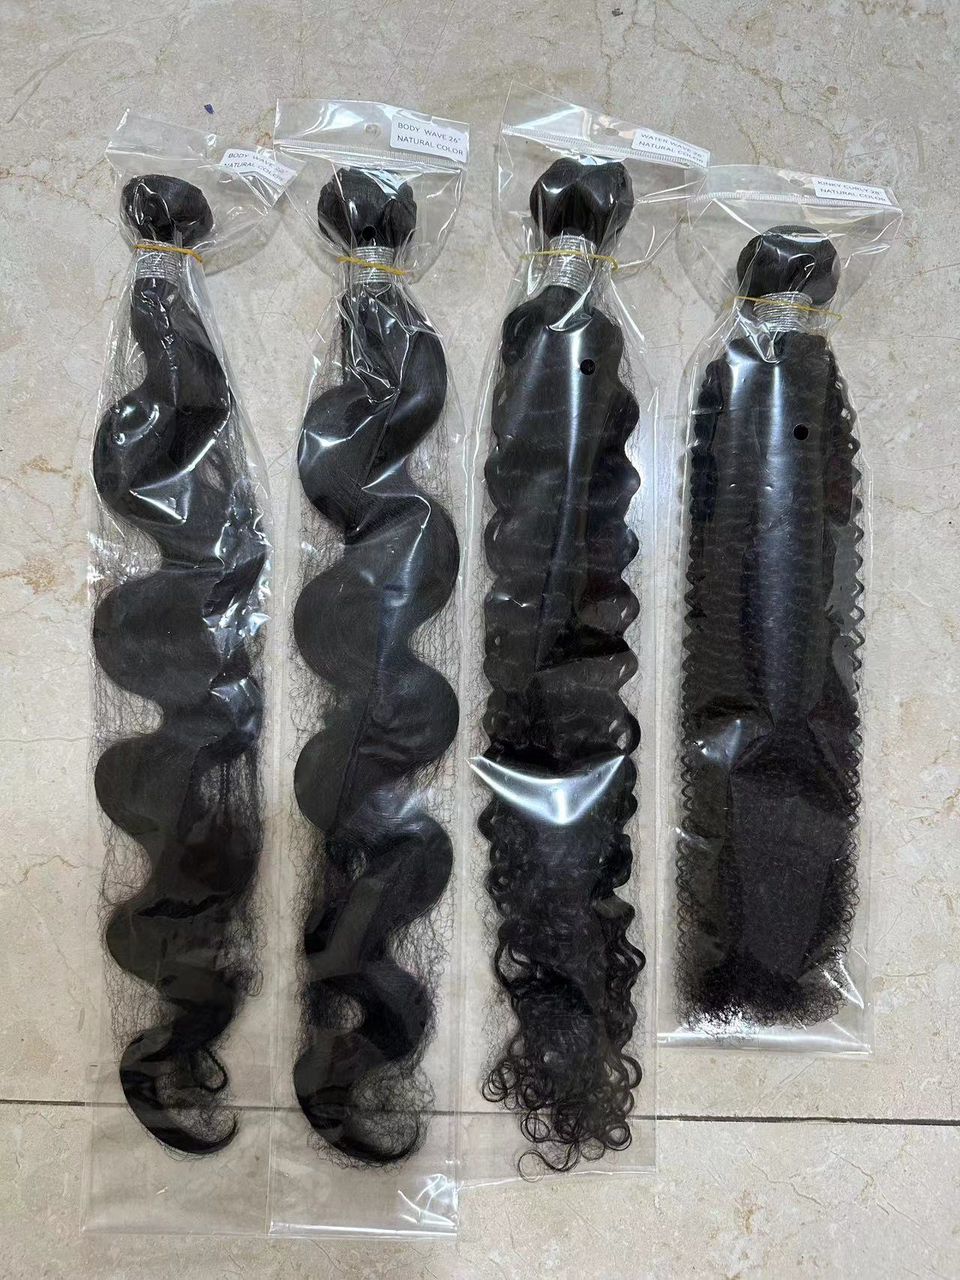 1 x Kinky Curly Human Hair Bundles 100g